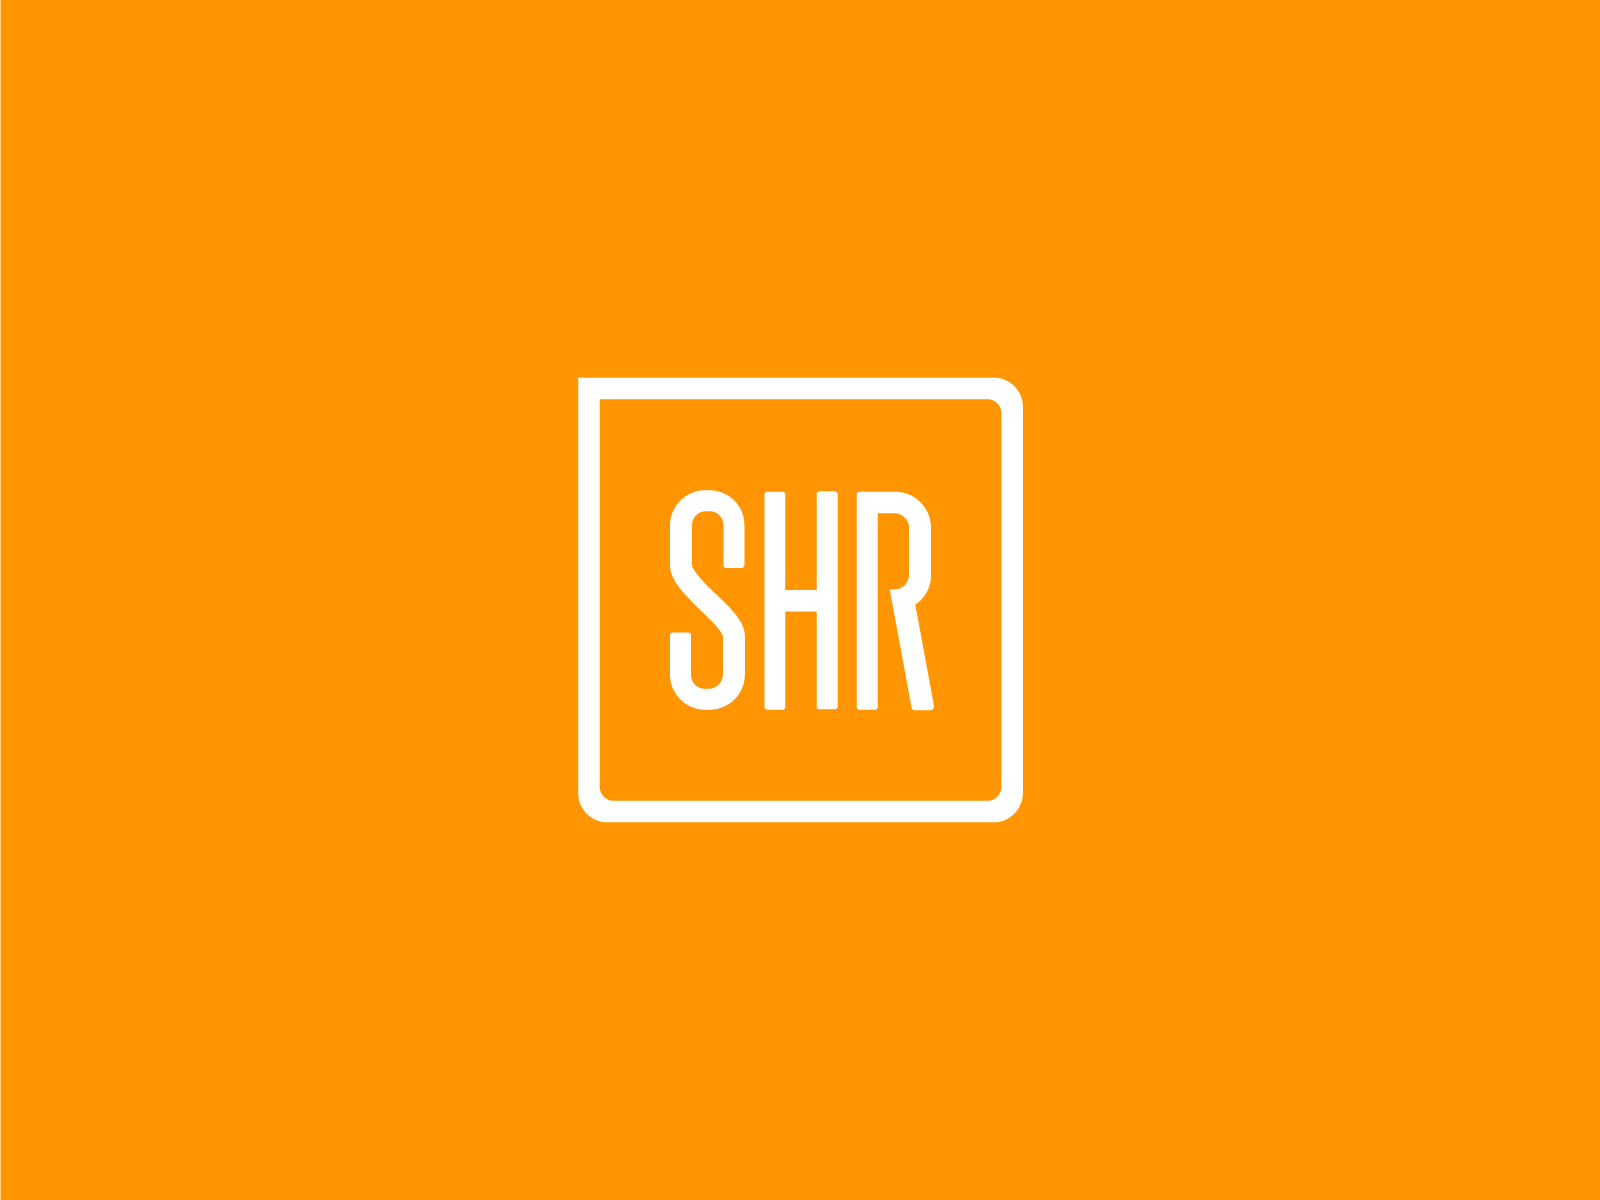 SHR Logo by Darren Ansley on Dribbble